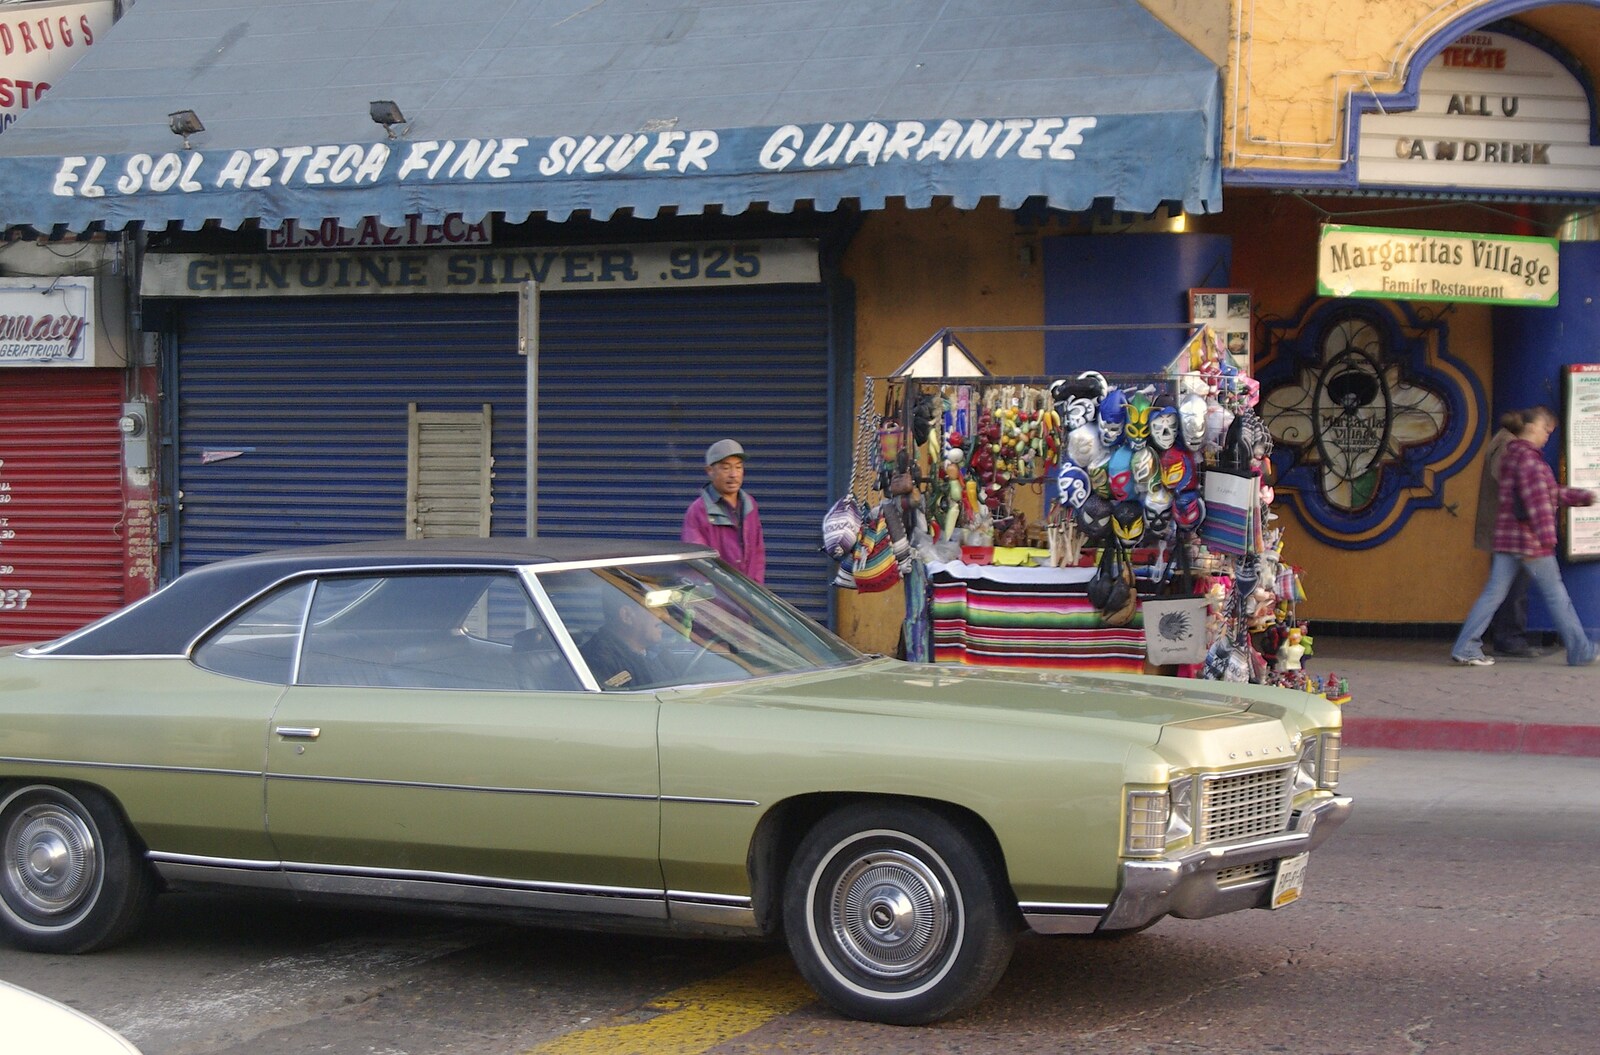 Rosarito and Tijuana, Baja California, Mexico - 2nd March 2008: A vintage American car